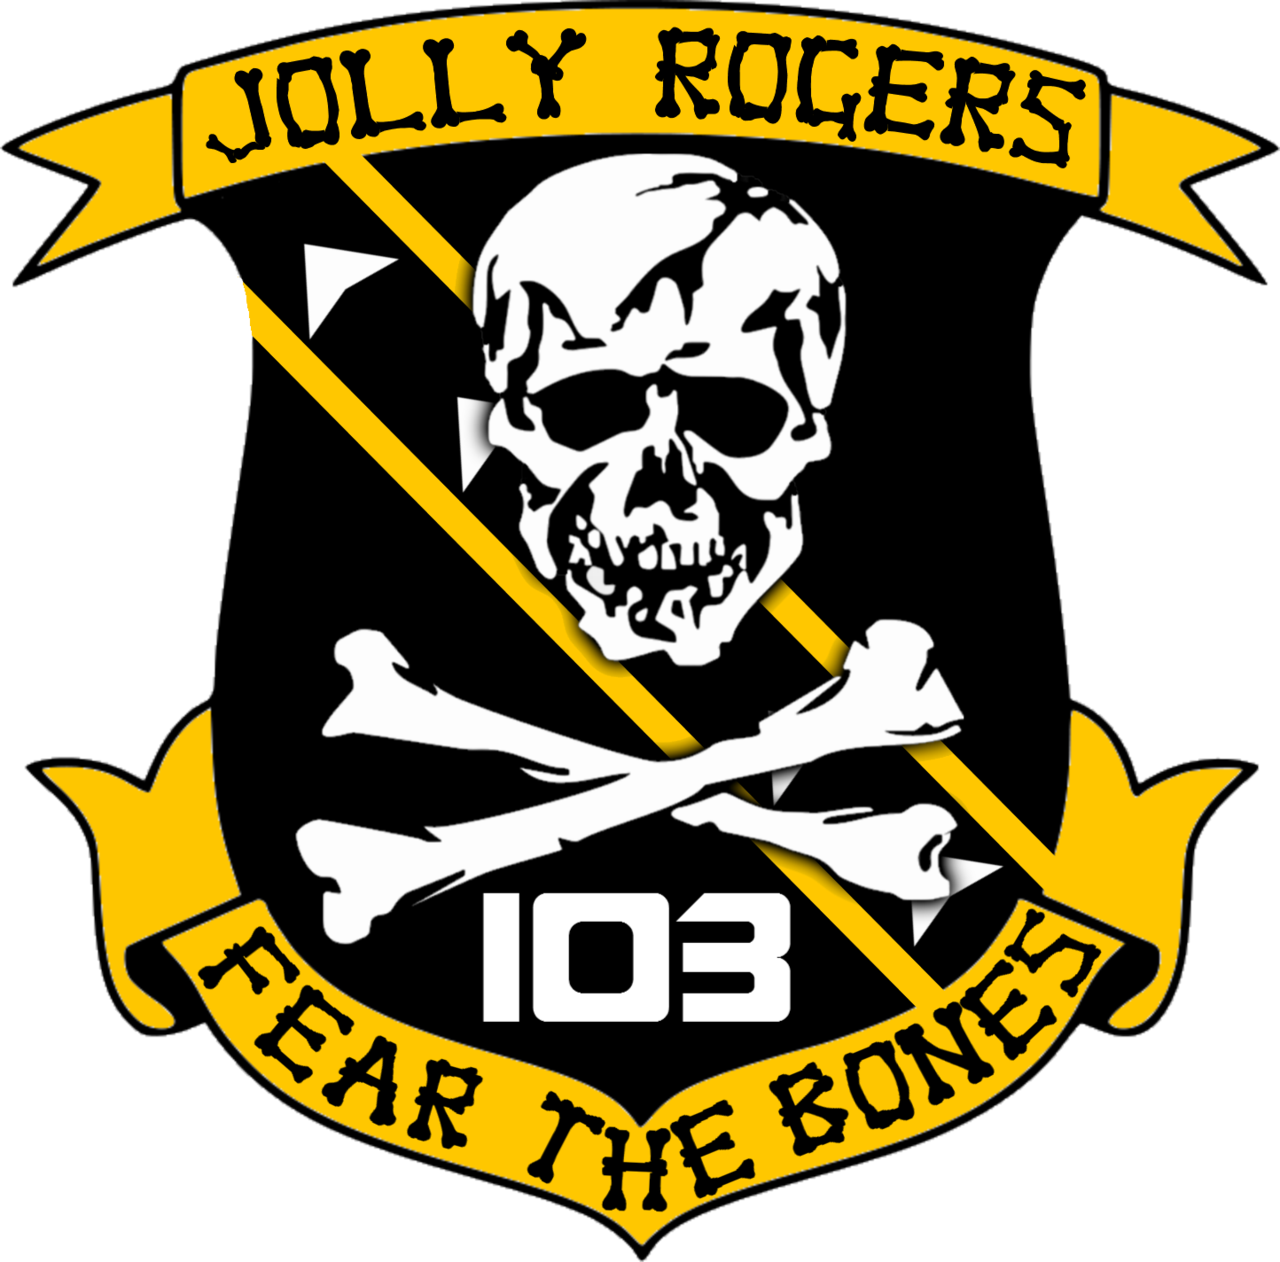 Jolly Rogers103 Fear The Bones Emblem PNG image